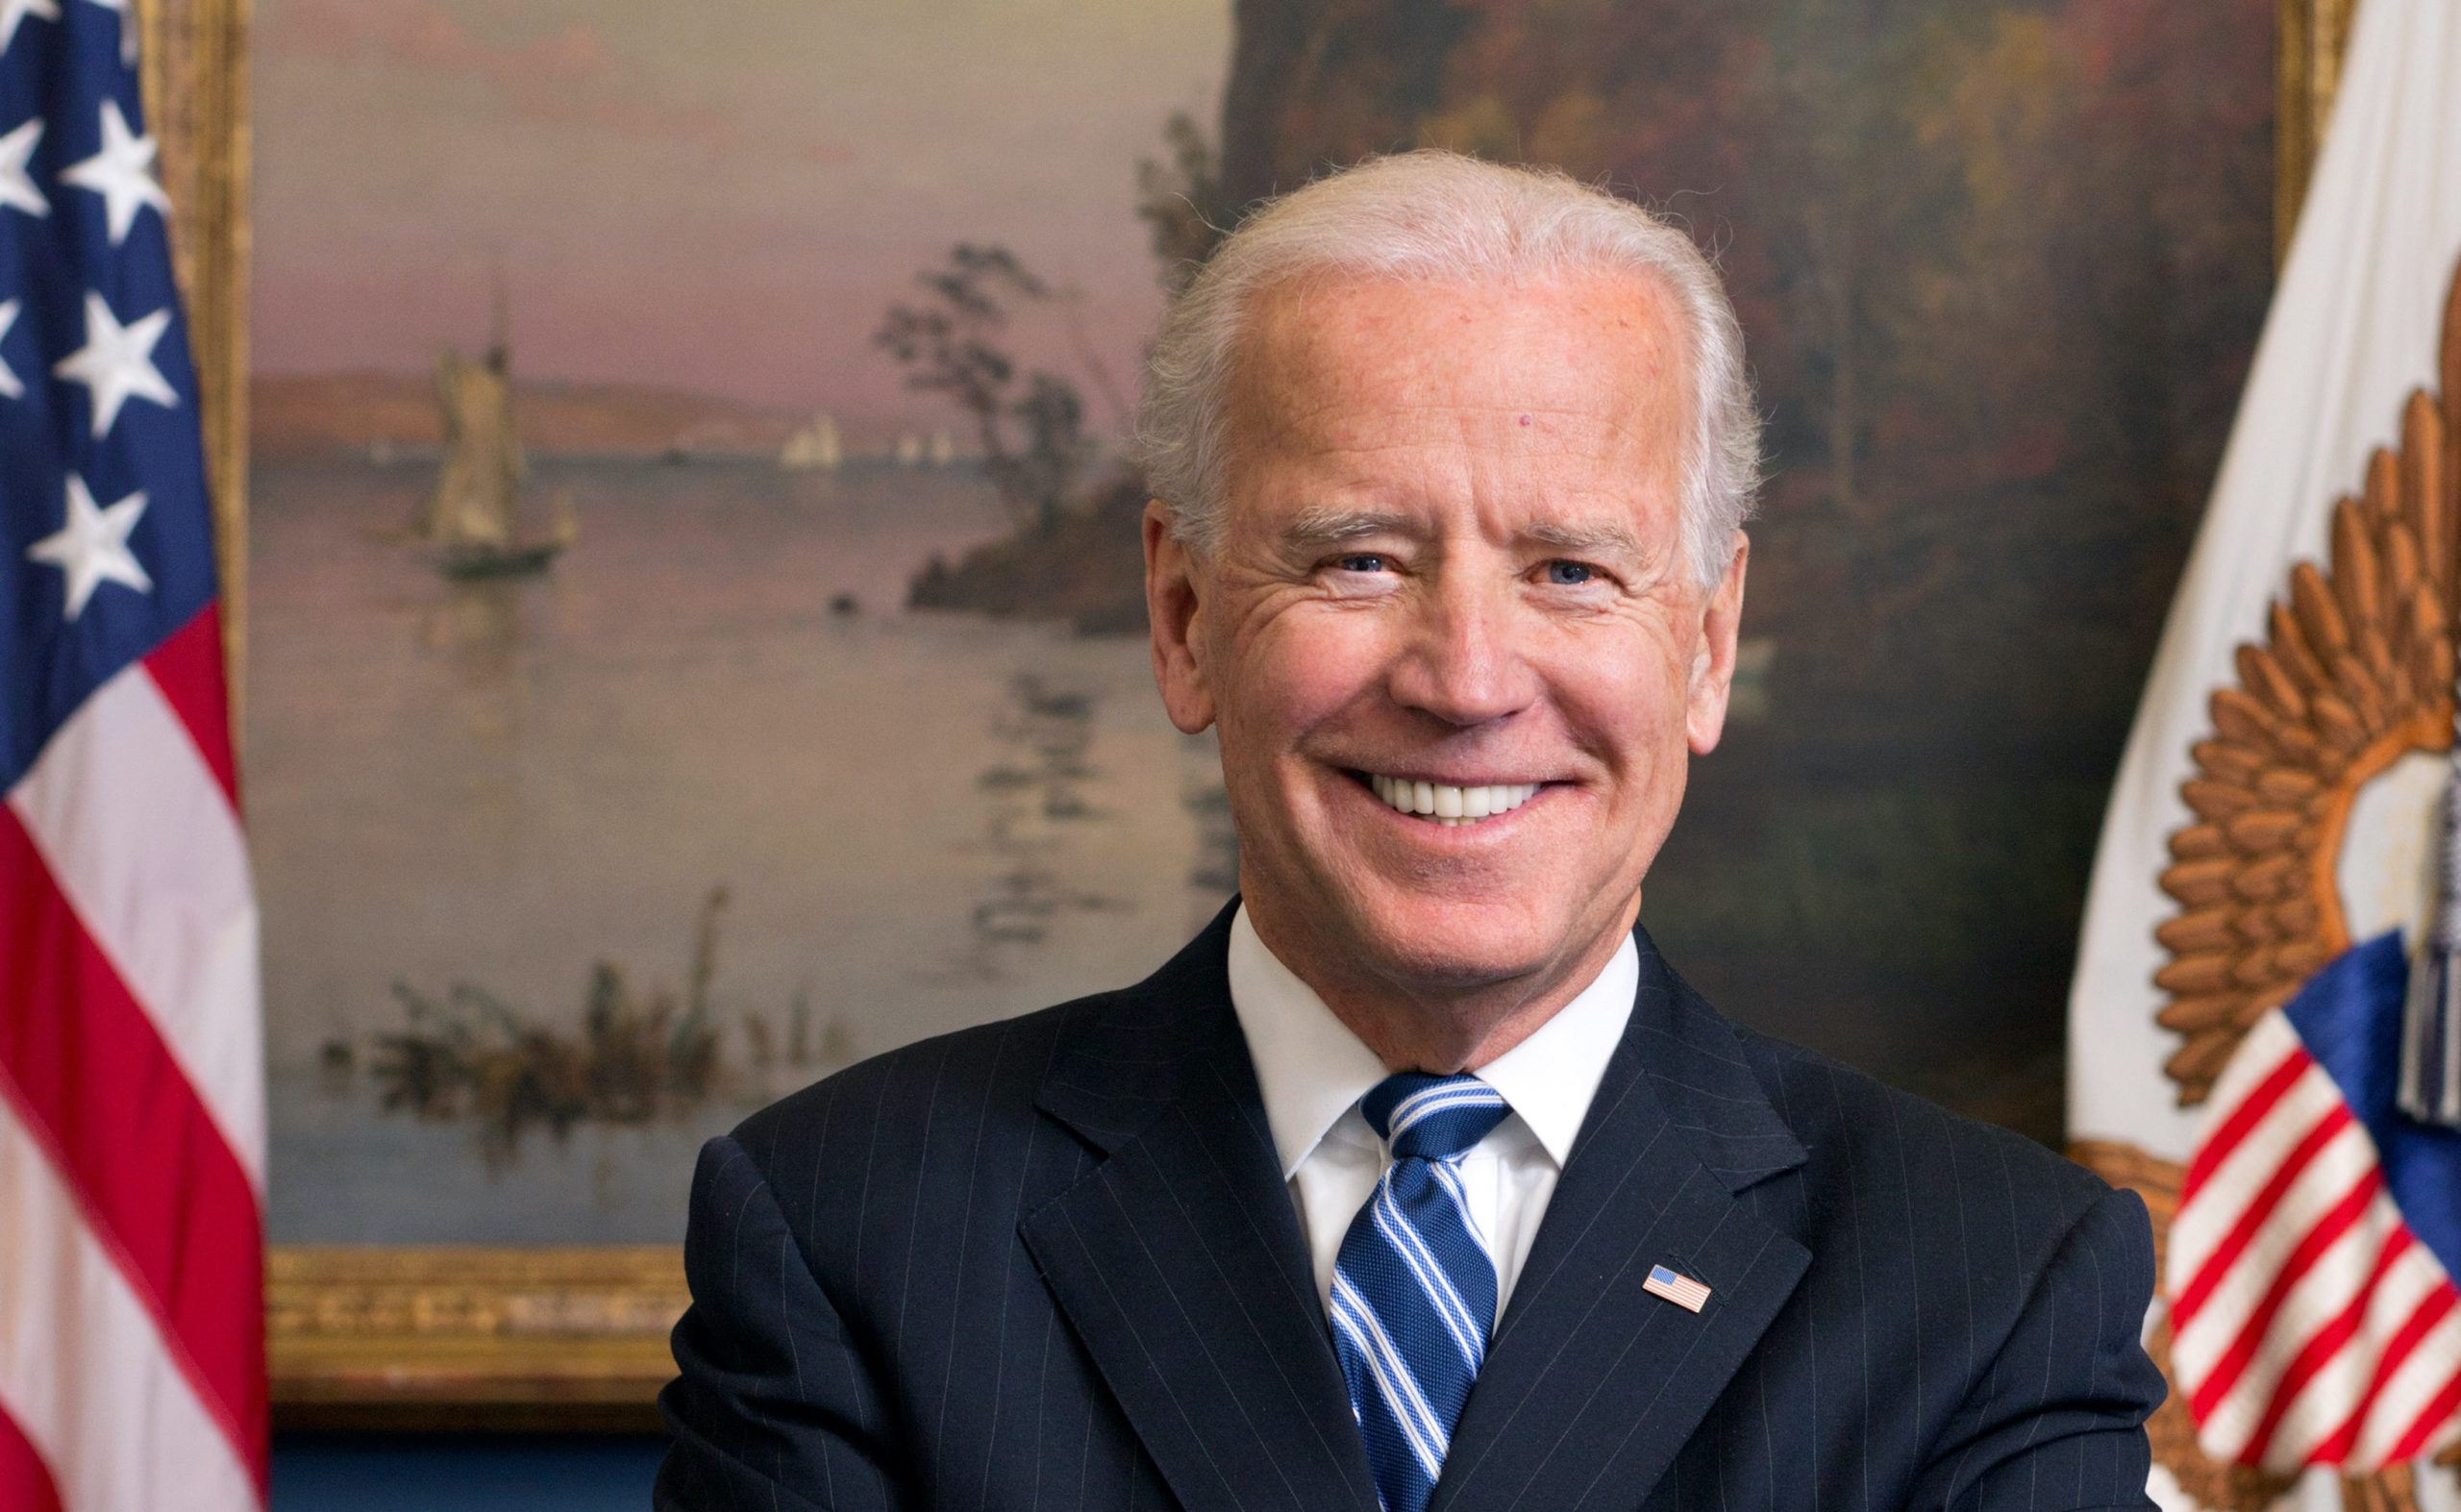 Joe Biden, President of the USA